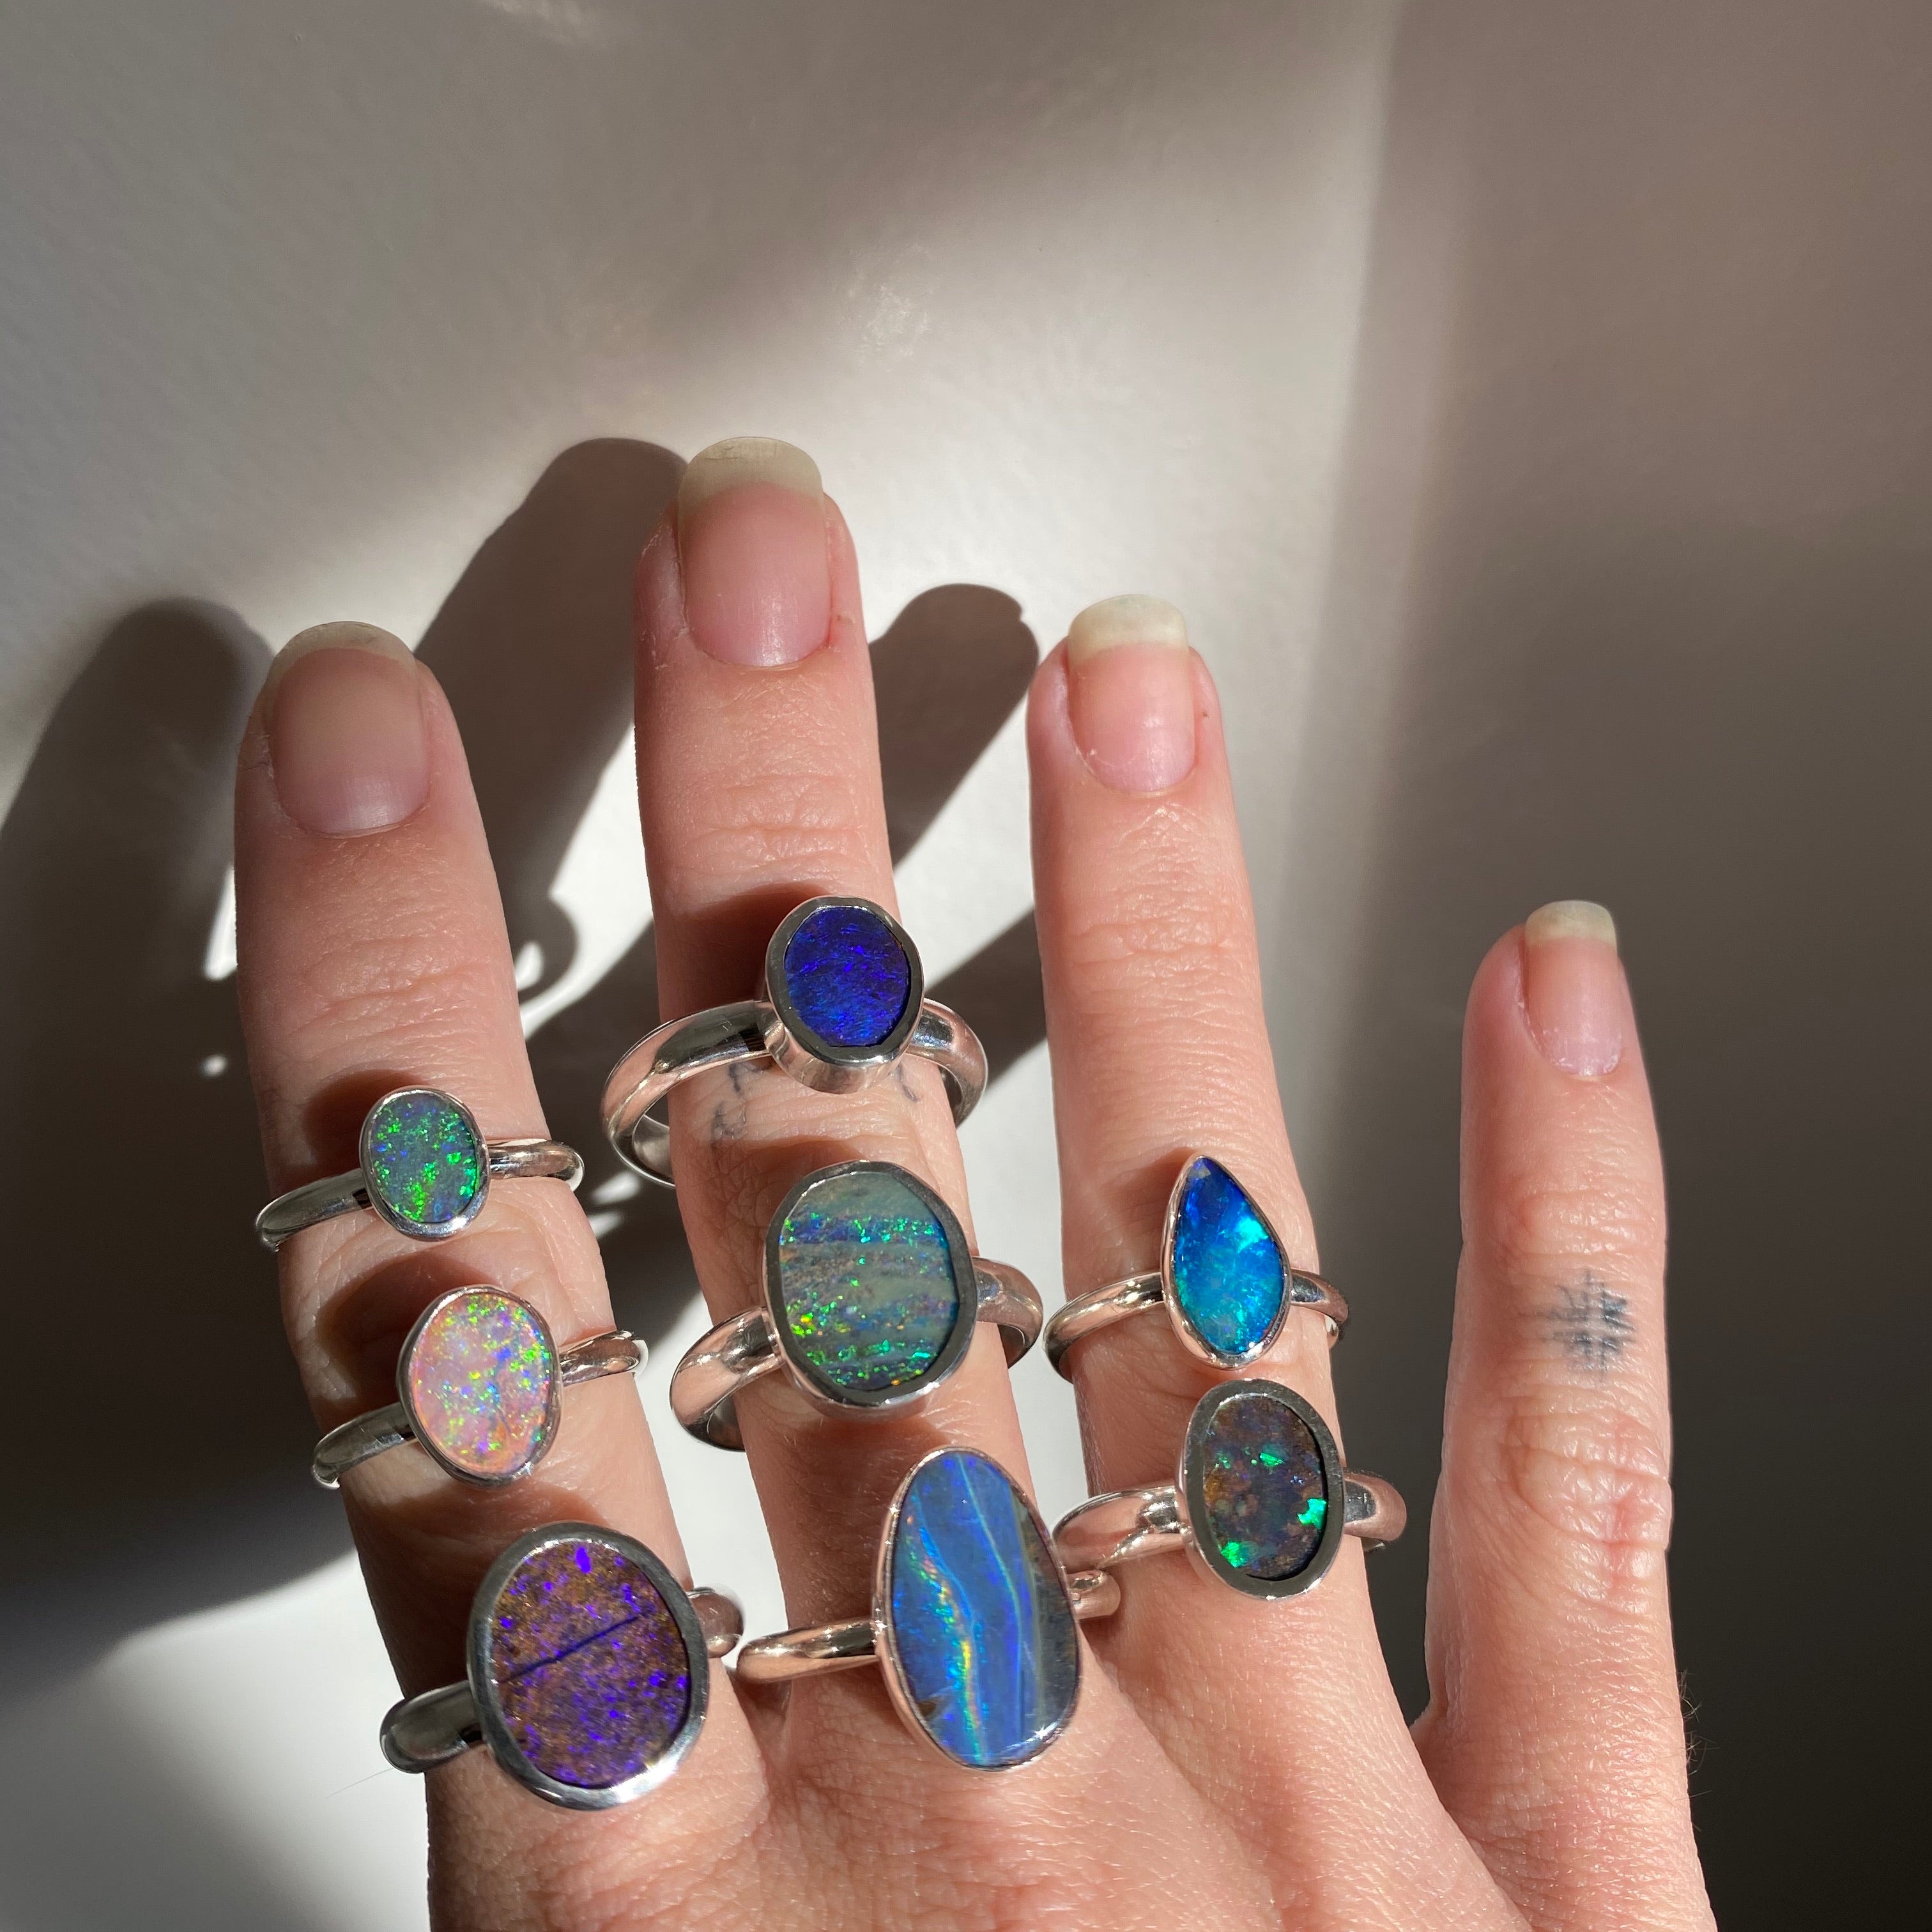 Opal Ring - Size U (10.5).